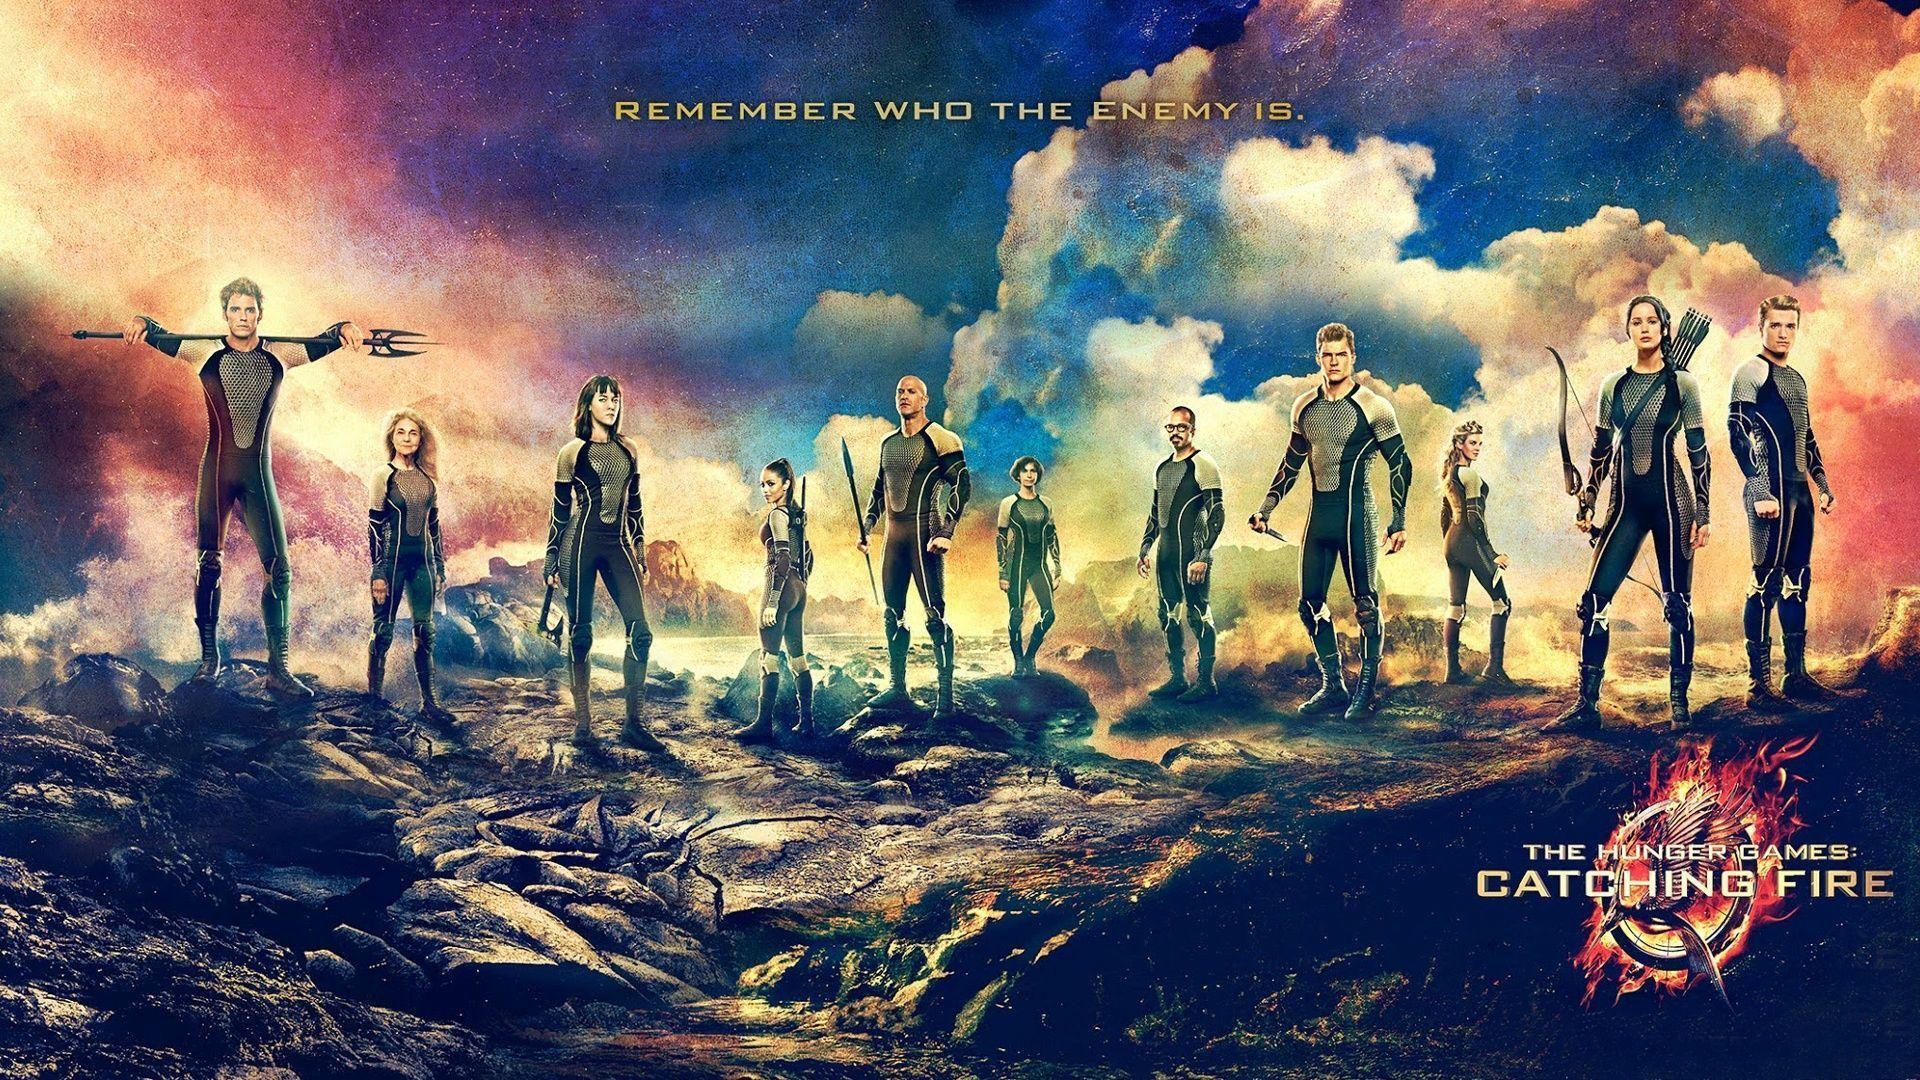 The Hunger Games Catching Fire Cast Wallpaper Download Wallpaper